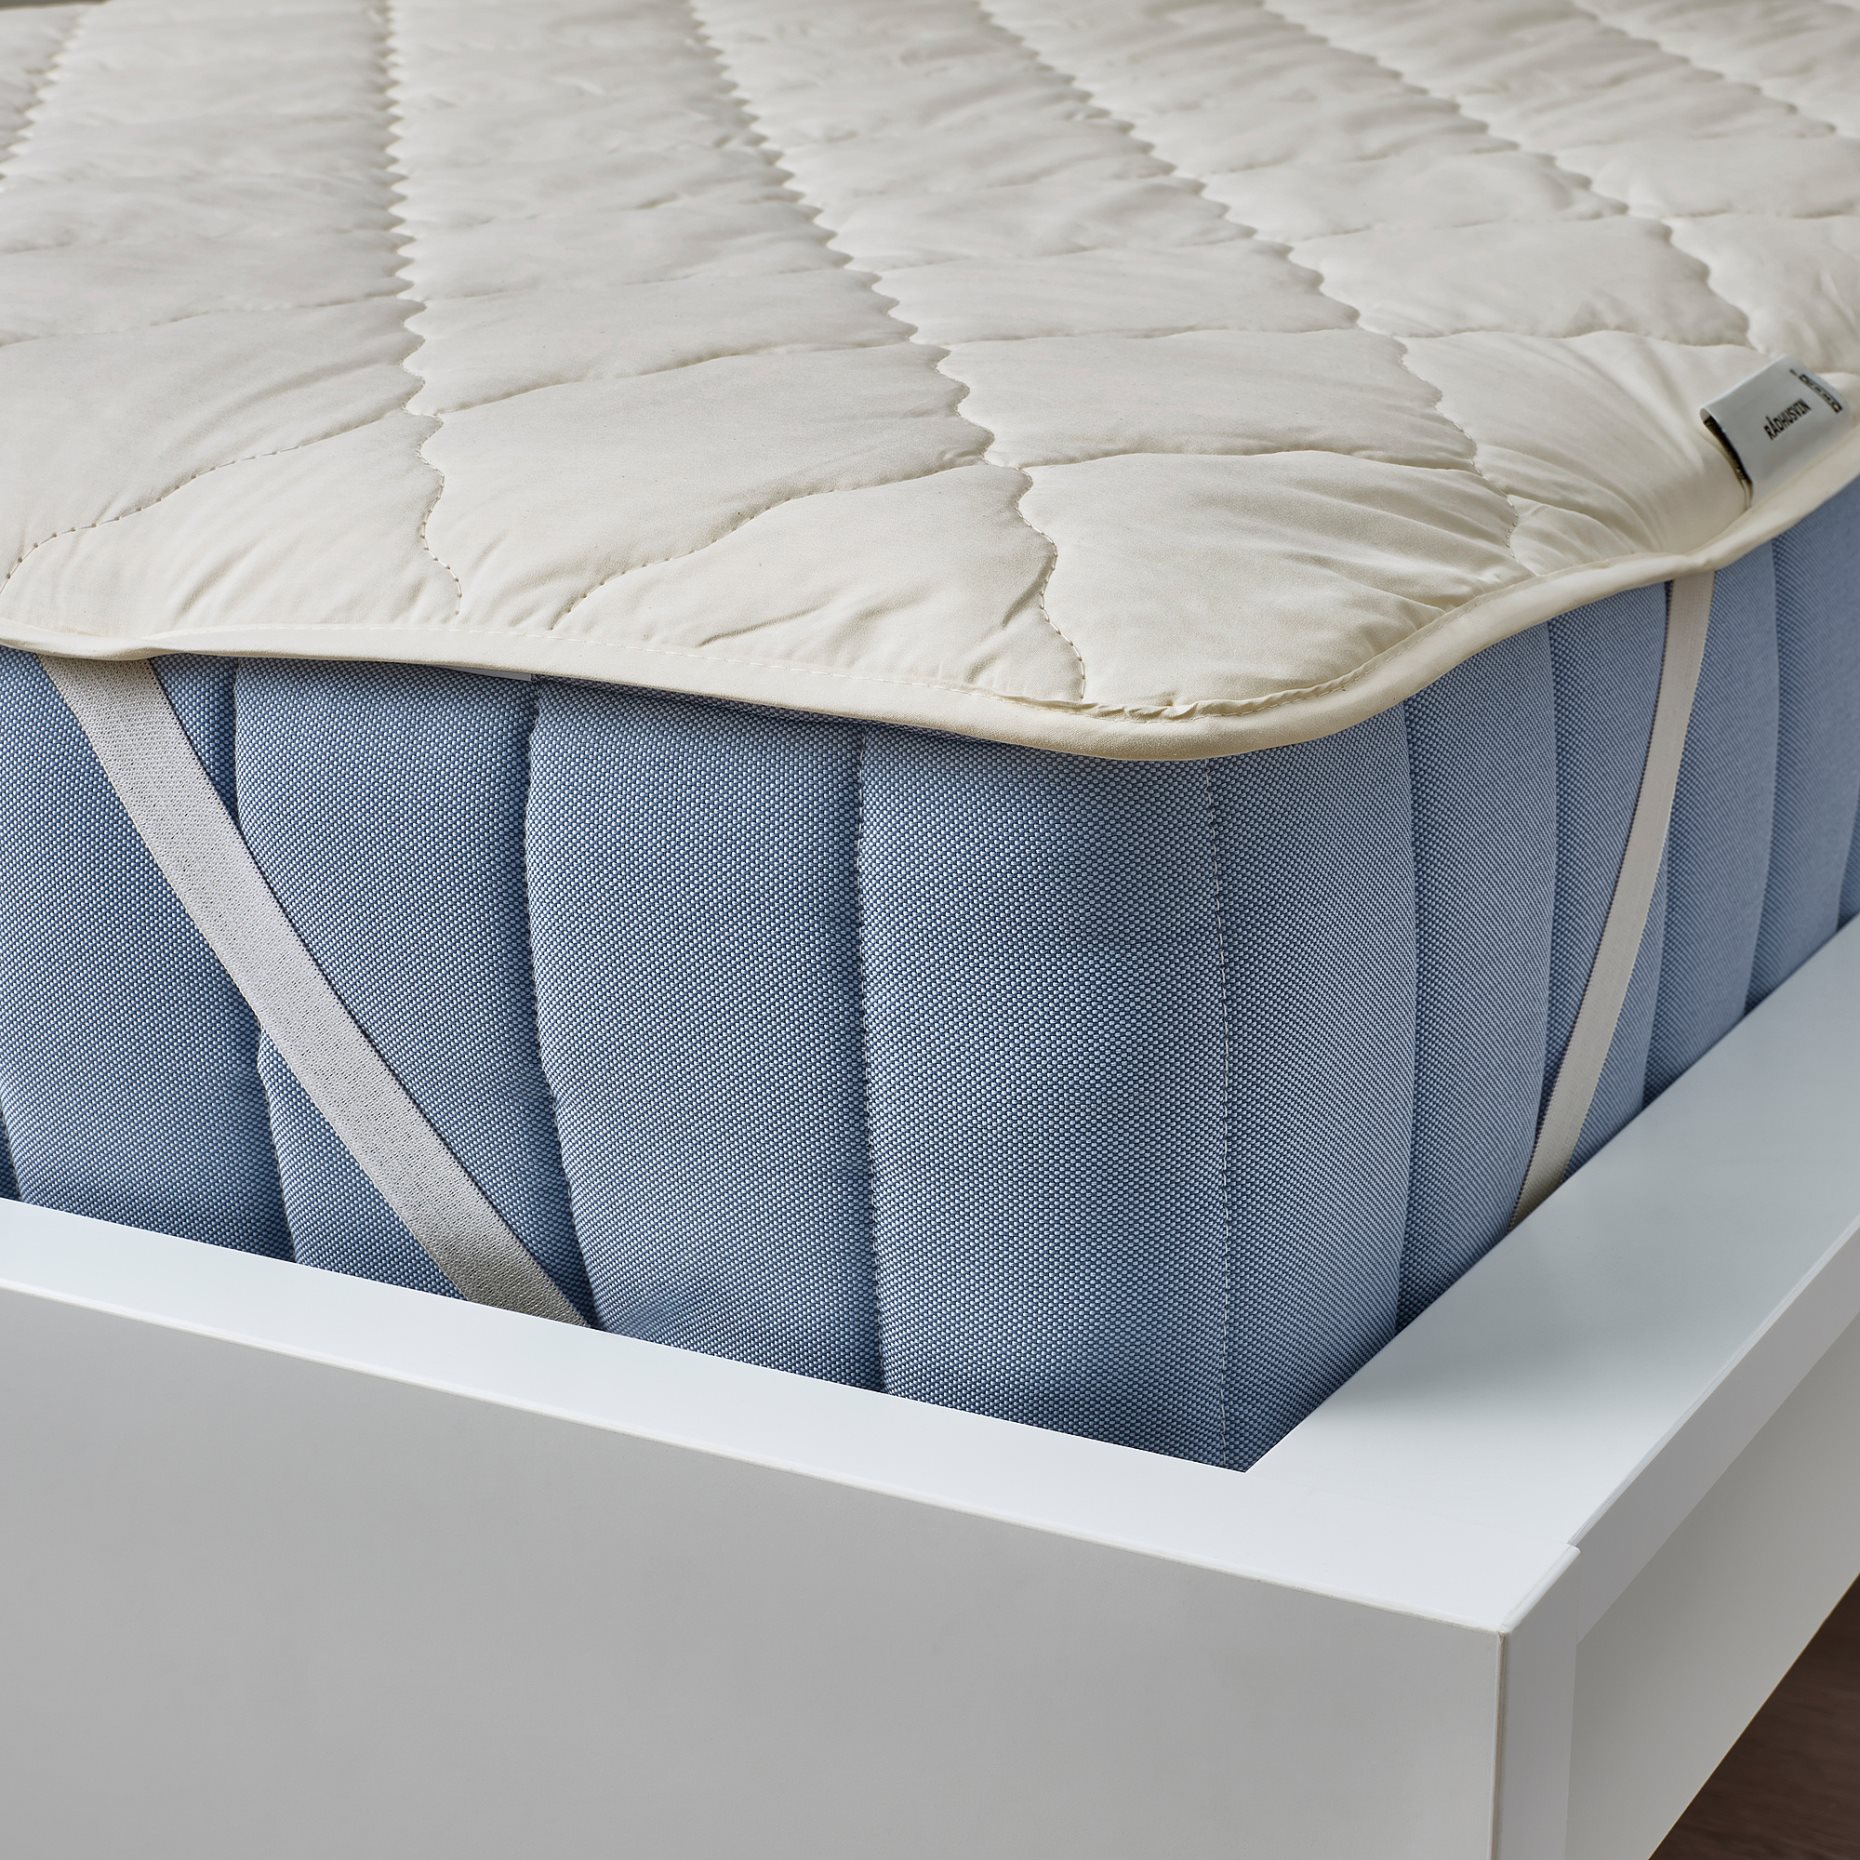 RÅDHUSVIN, mattress protector, 140x200 cm, 805.583.82